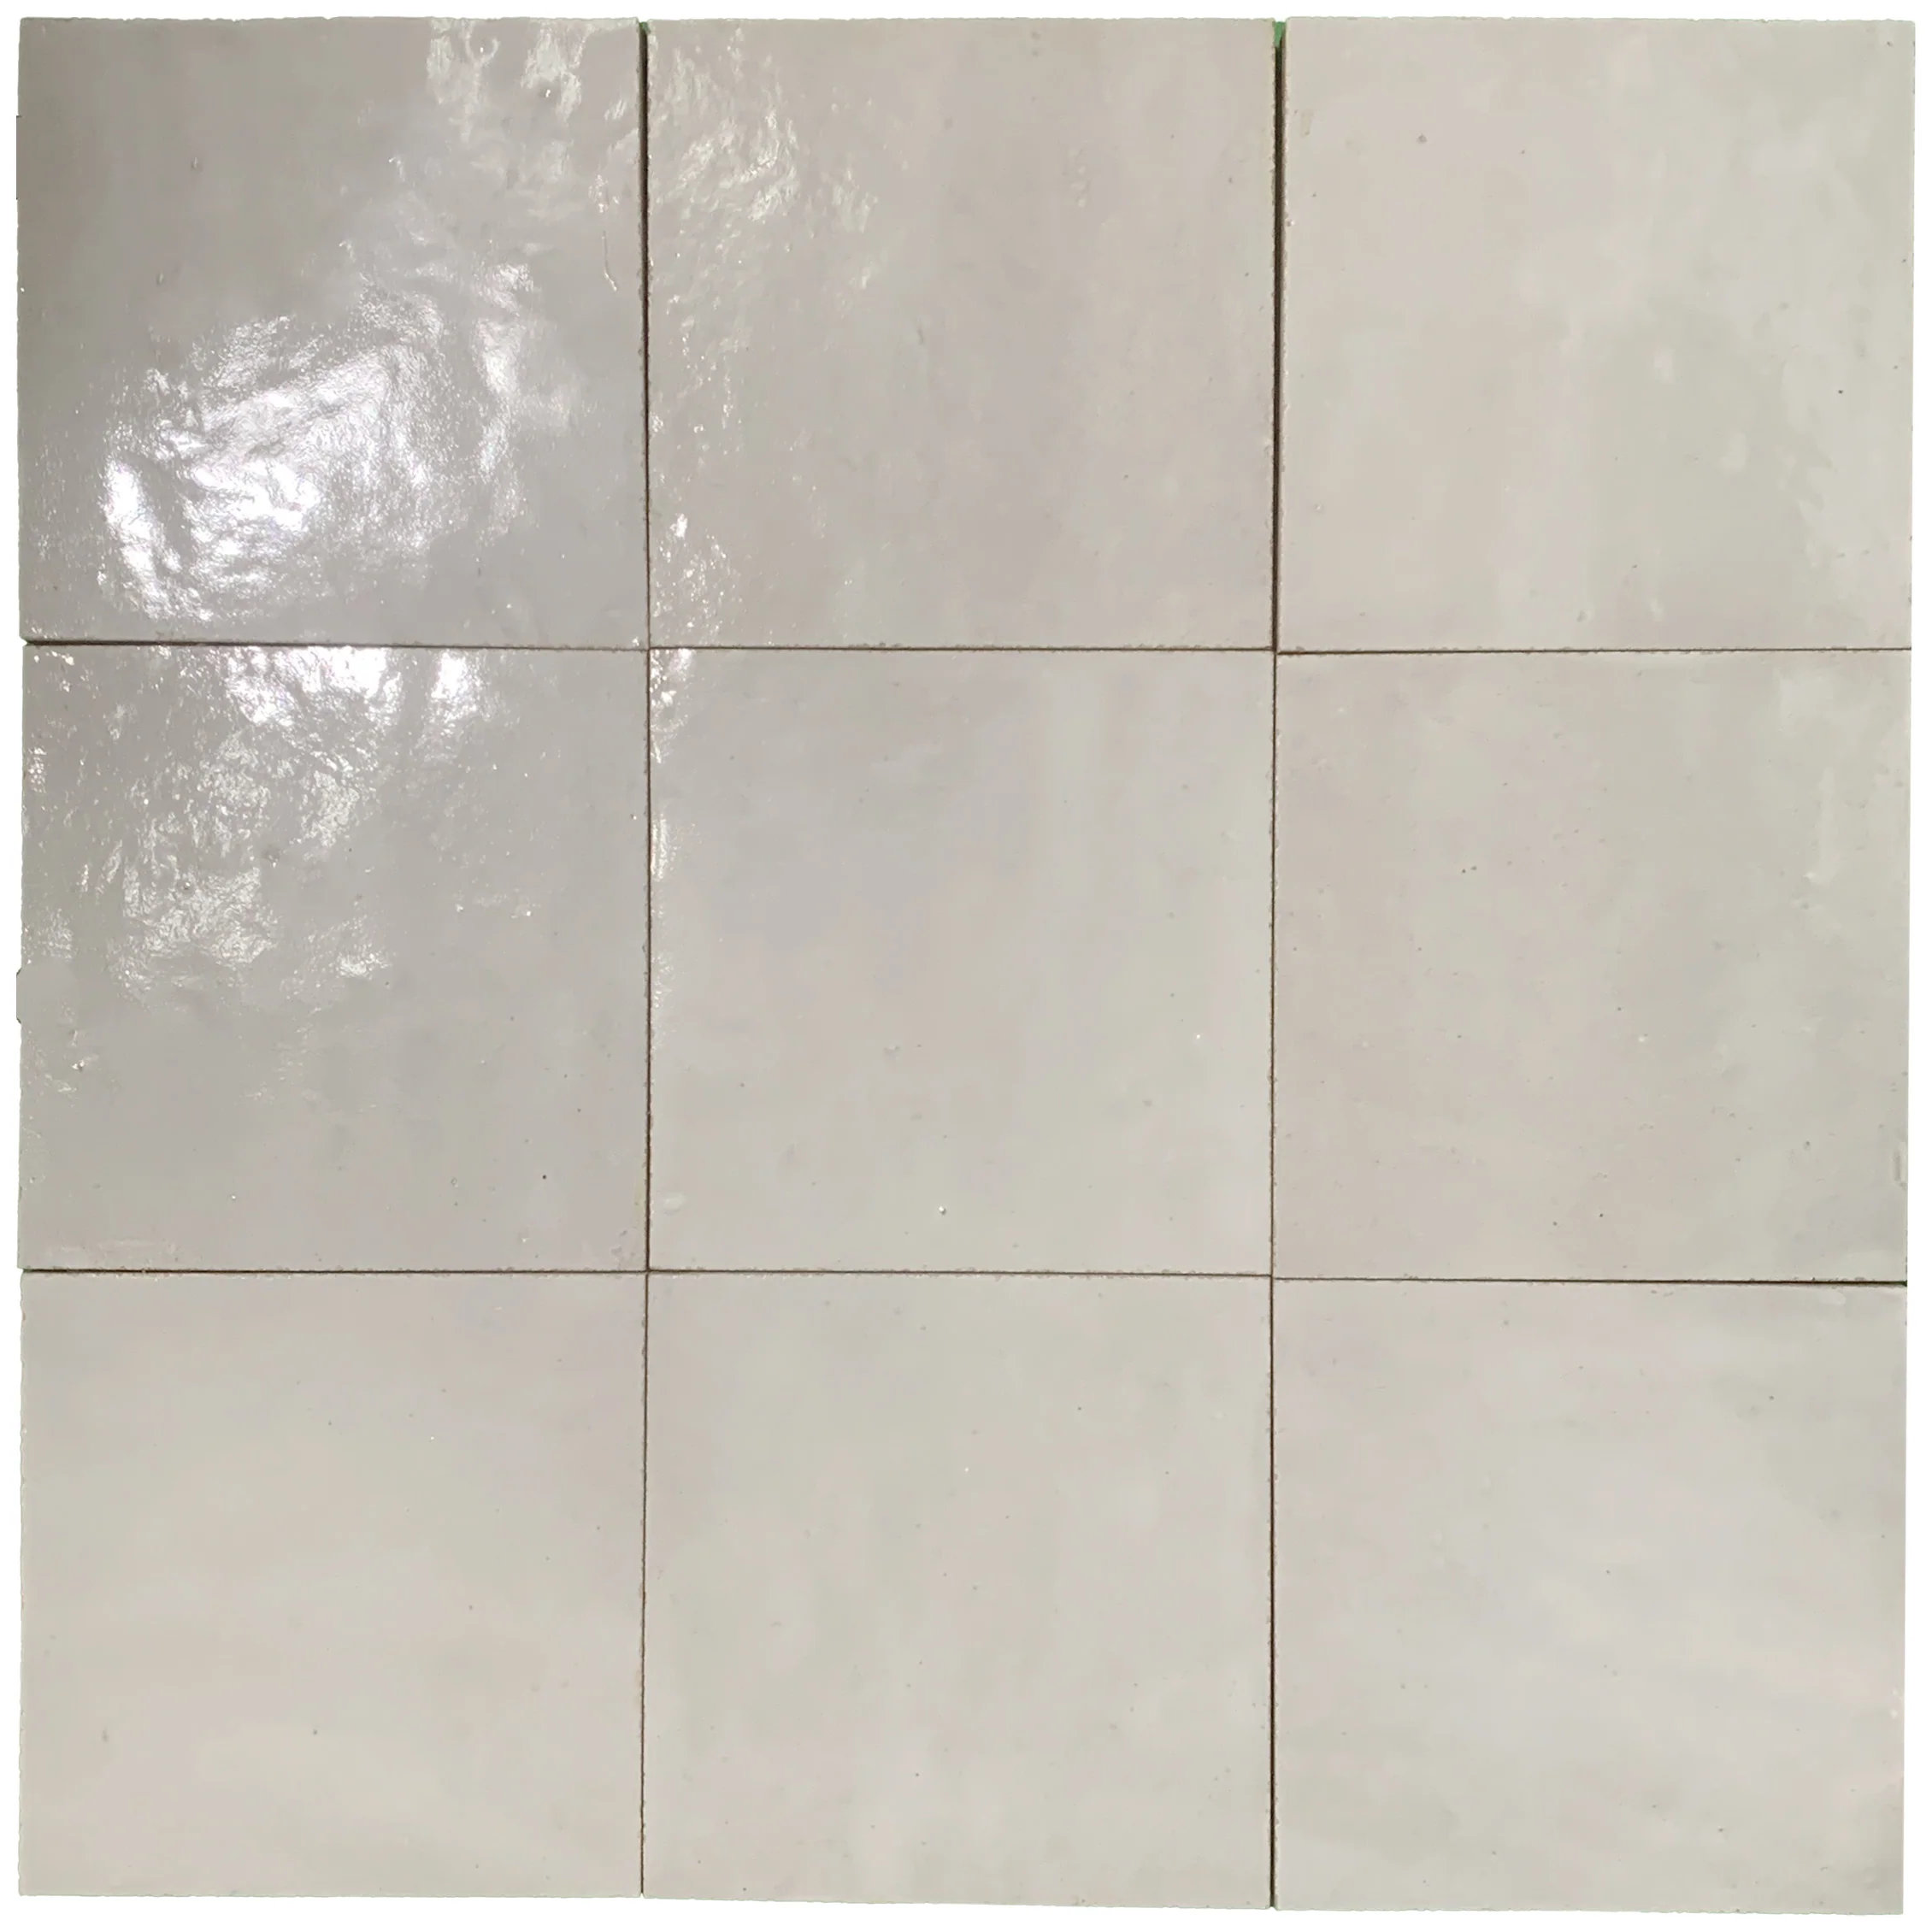 Creating a Modern Bathroom Design With Mosaic Tiles - Savannah Surfaces